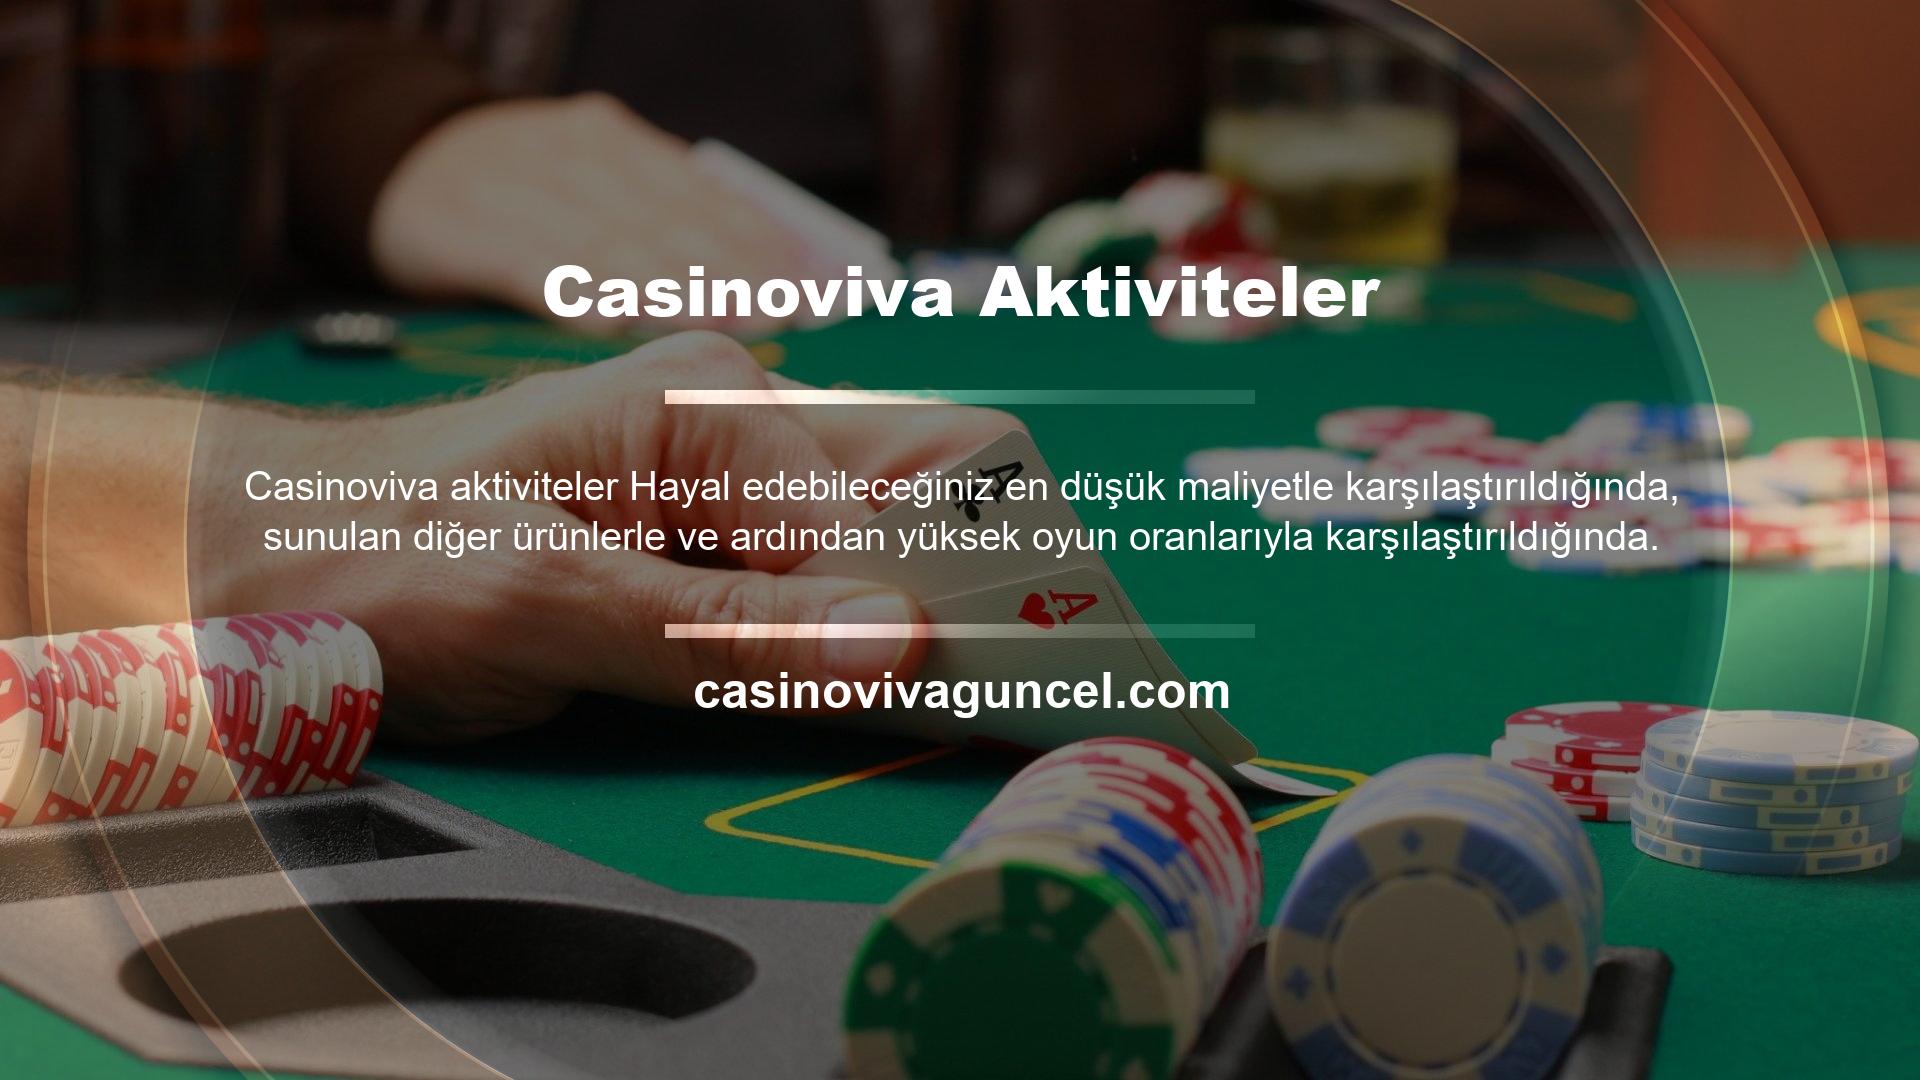 Casinoviva Aktiviteler